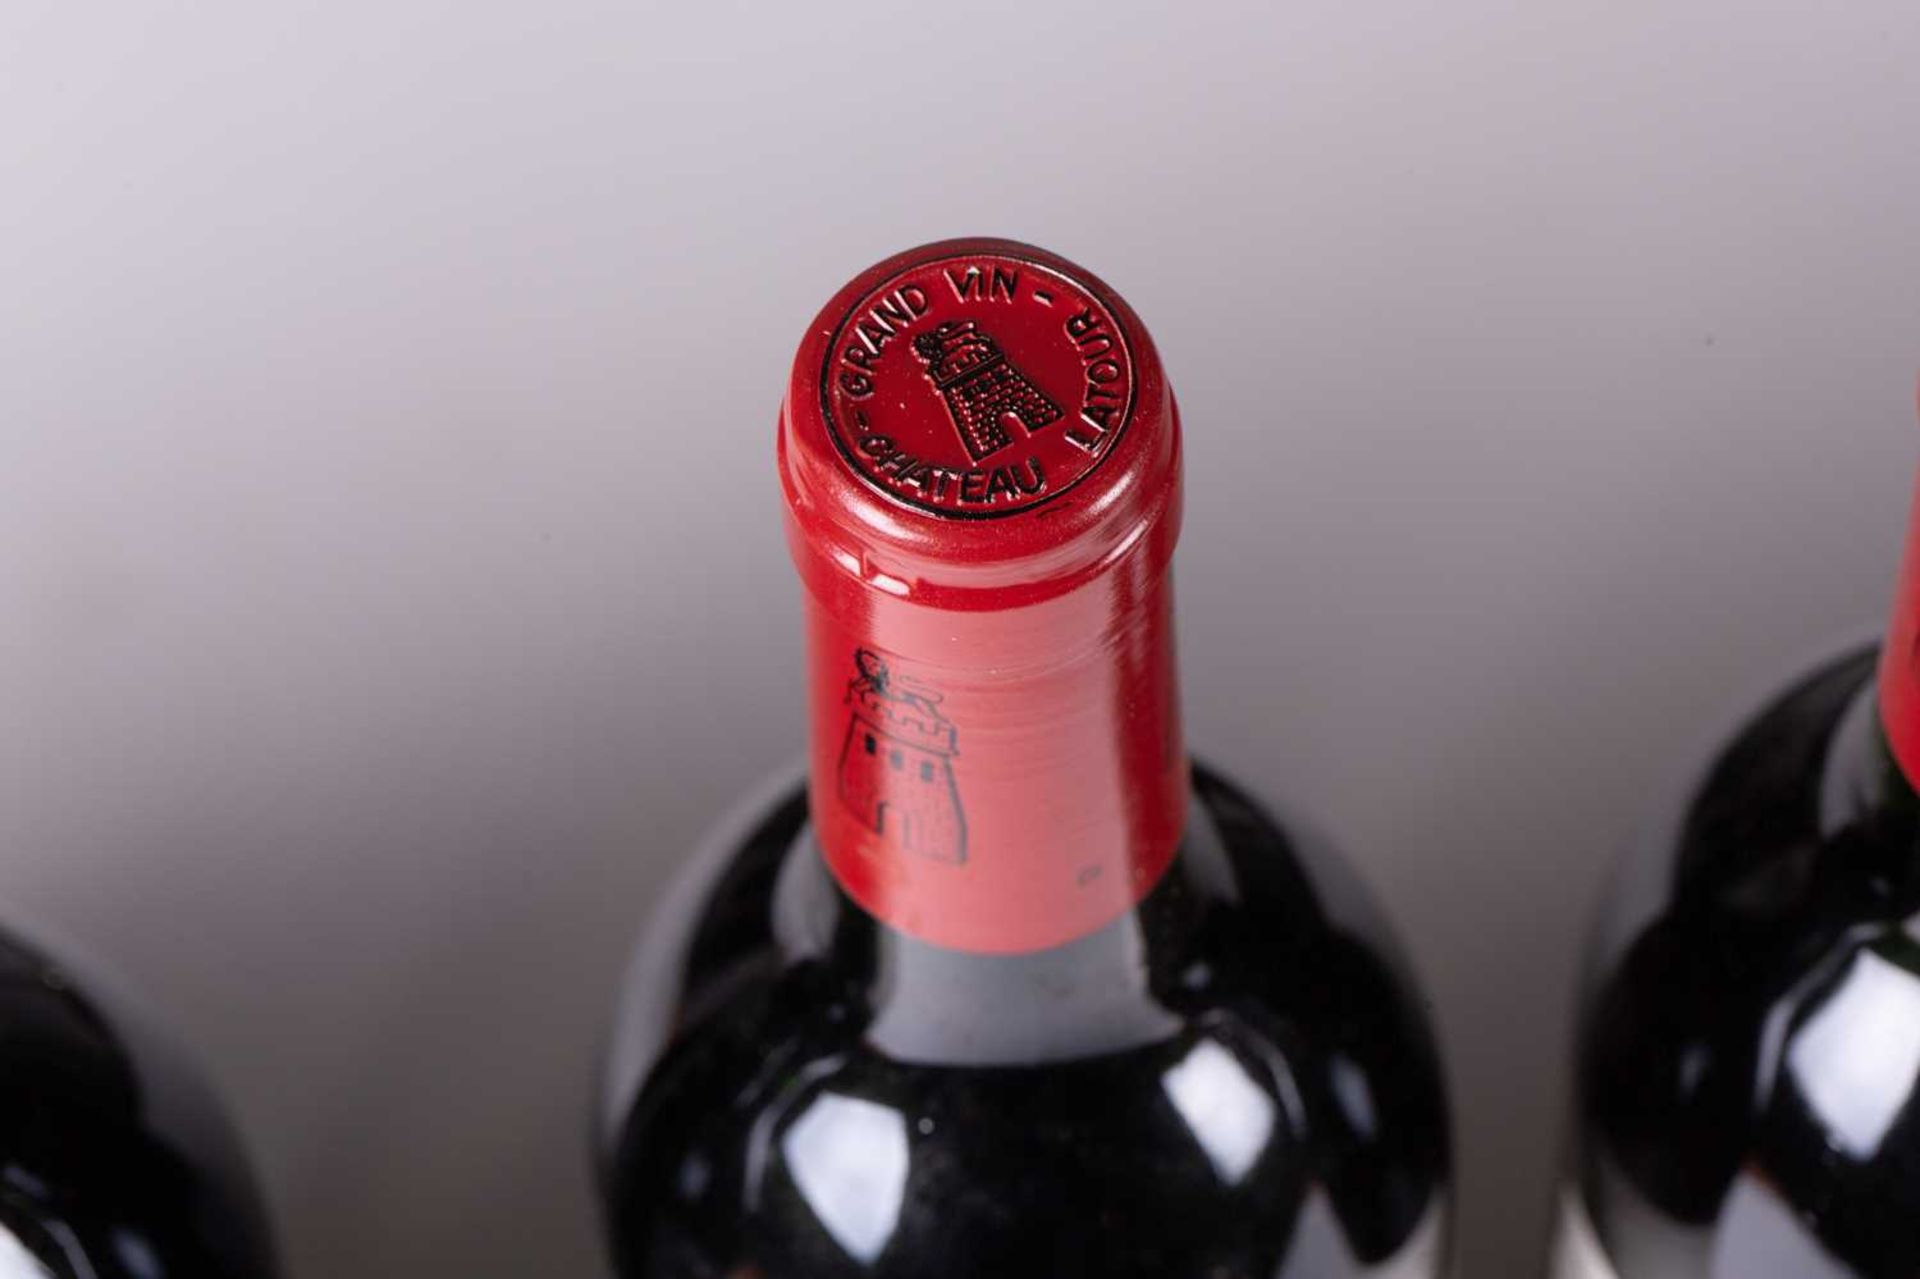 A twelve bottle case of Grand Vin de Chateau Latour, 1988, tissue wrapped bottles, ullage bottom - Image 19 of 21